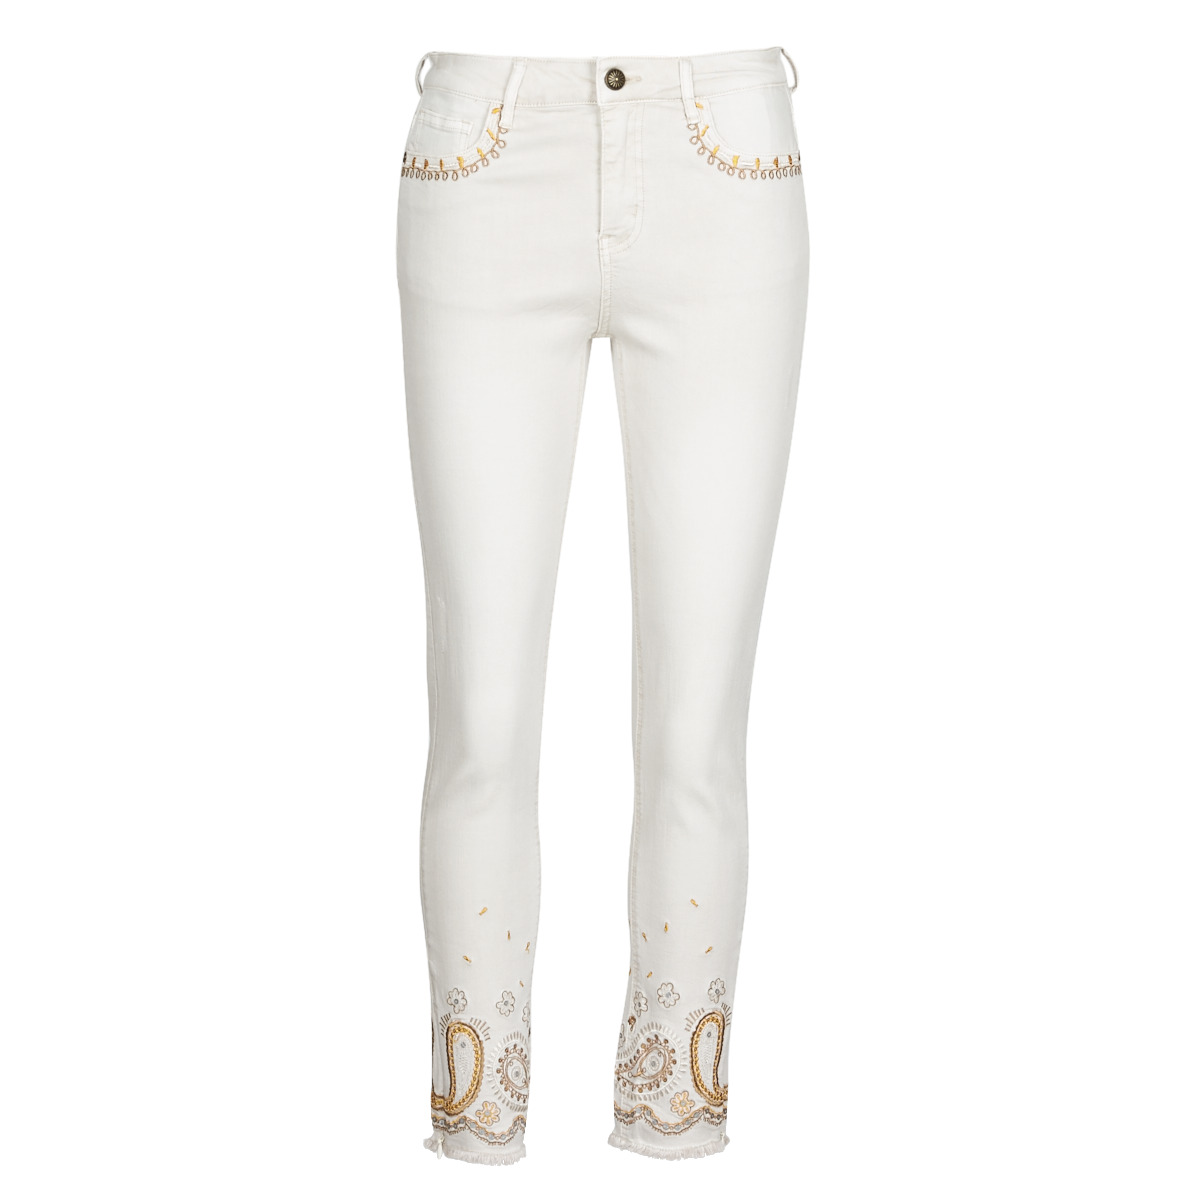 Vêtements Femme Jeans long-sleeved slim Desigual PAISLEY Blanc